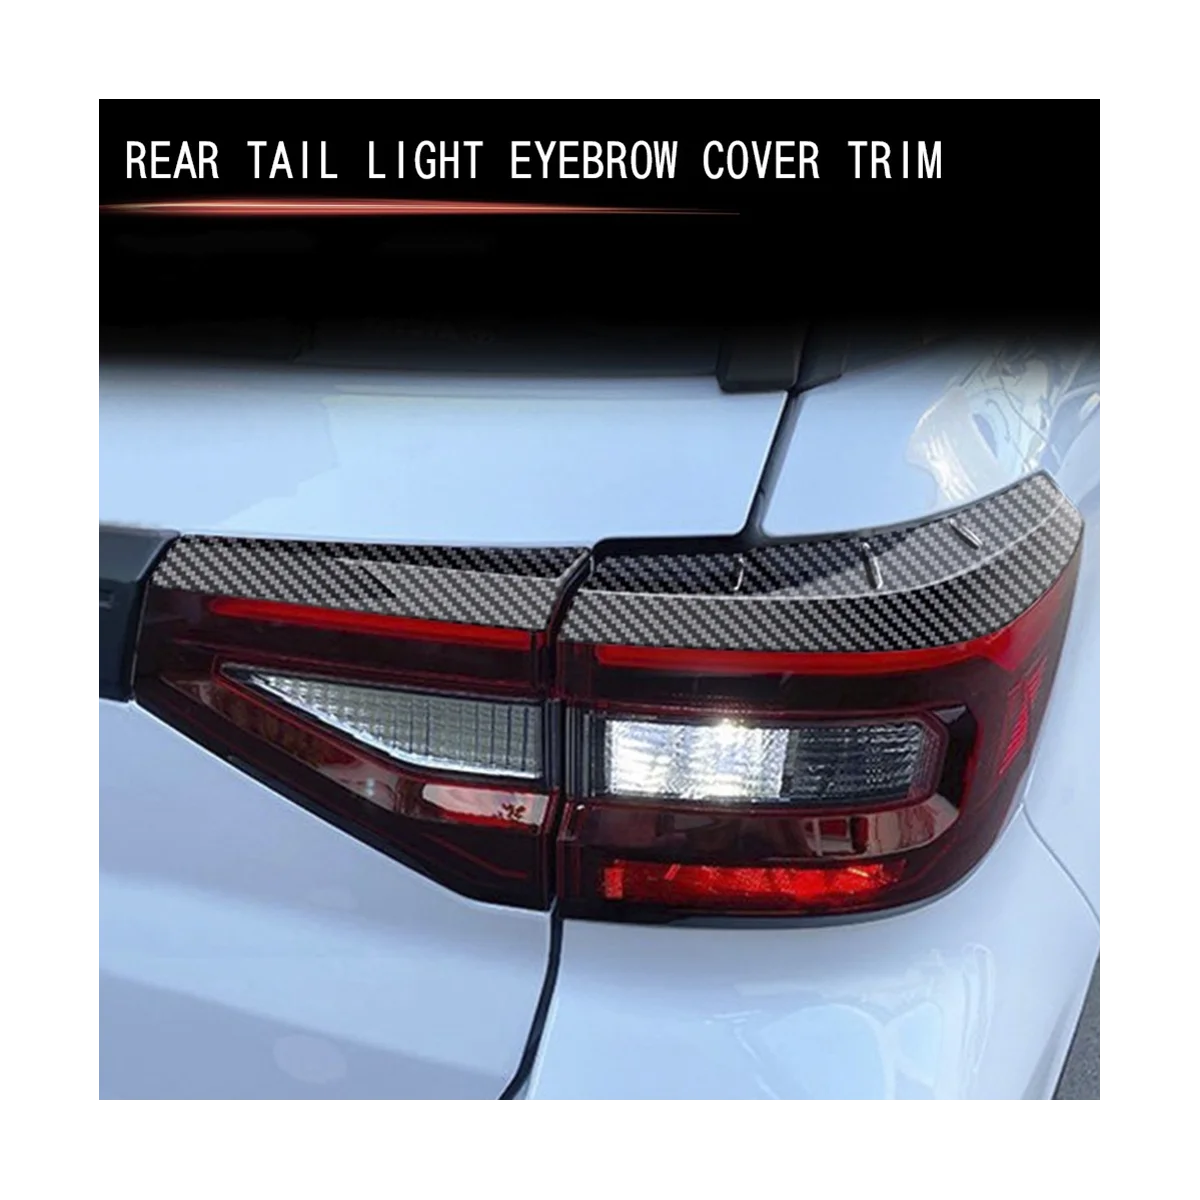 Ogljikovih Vlaken karoserije Zadnji Rep Svetlobe Okvir Palico Luč Kritje Trim Obrvi za Toyota Raize 200